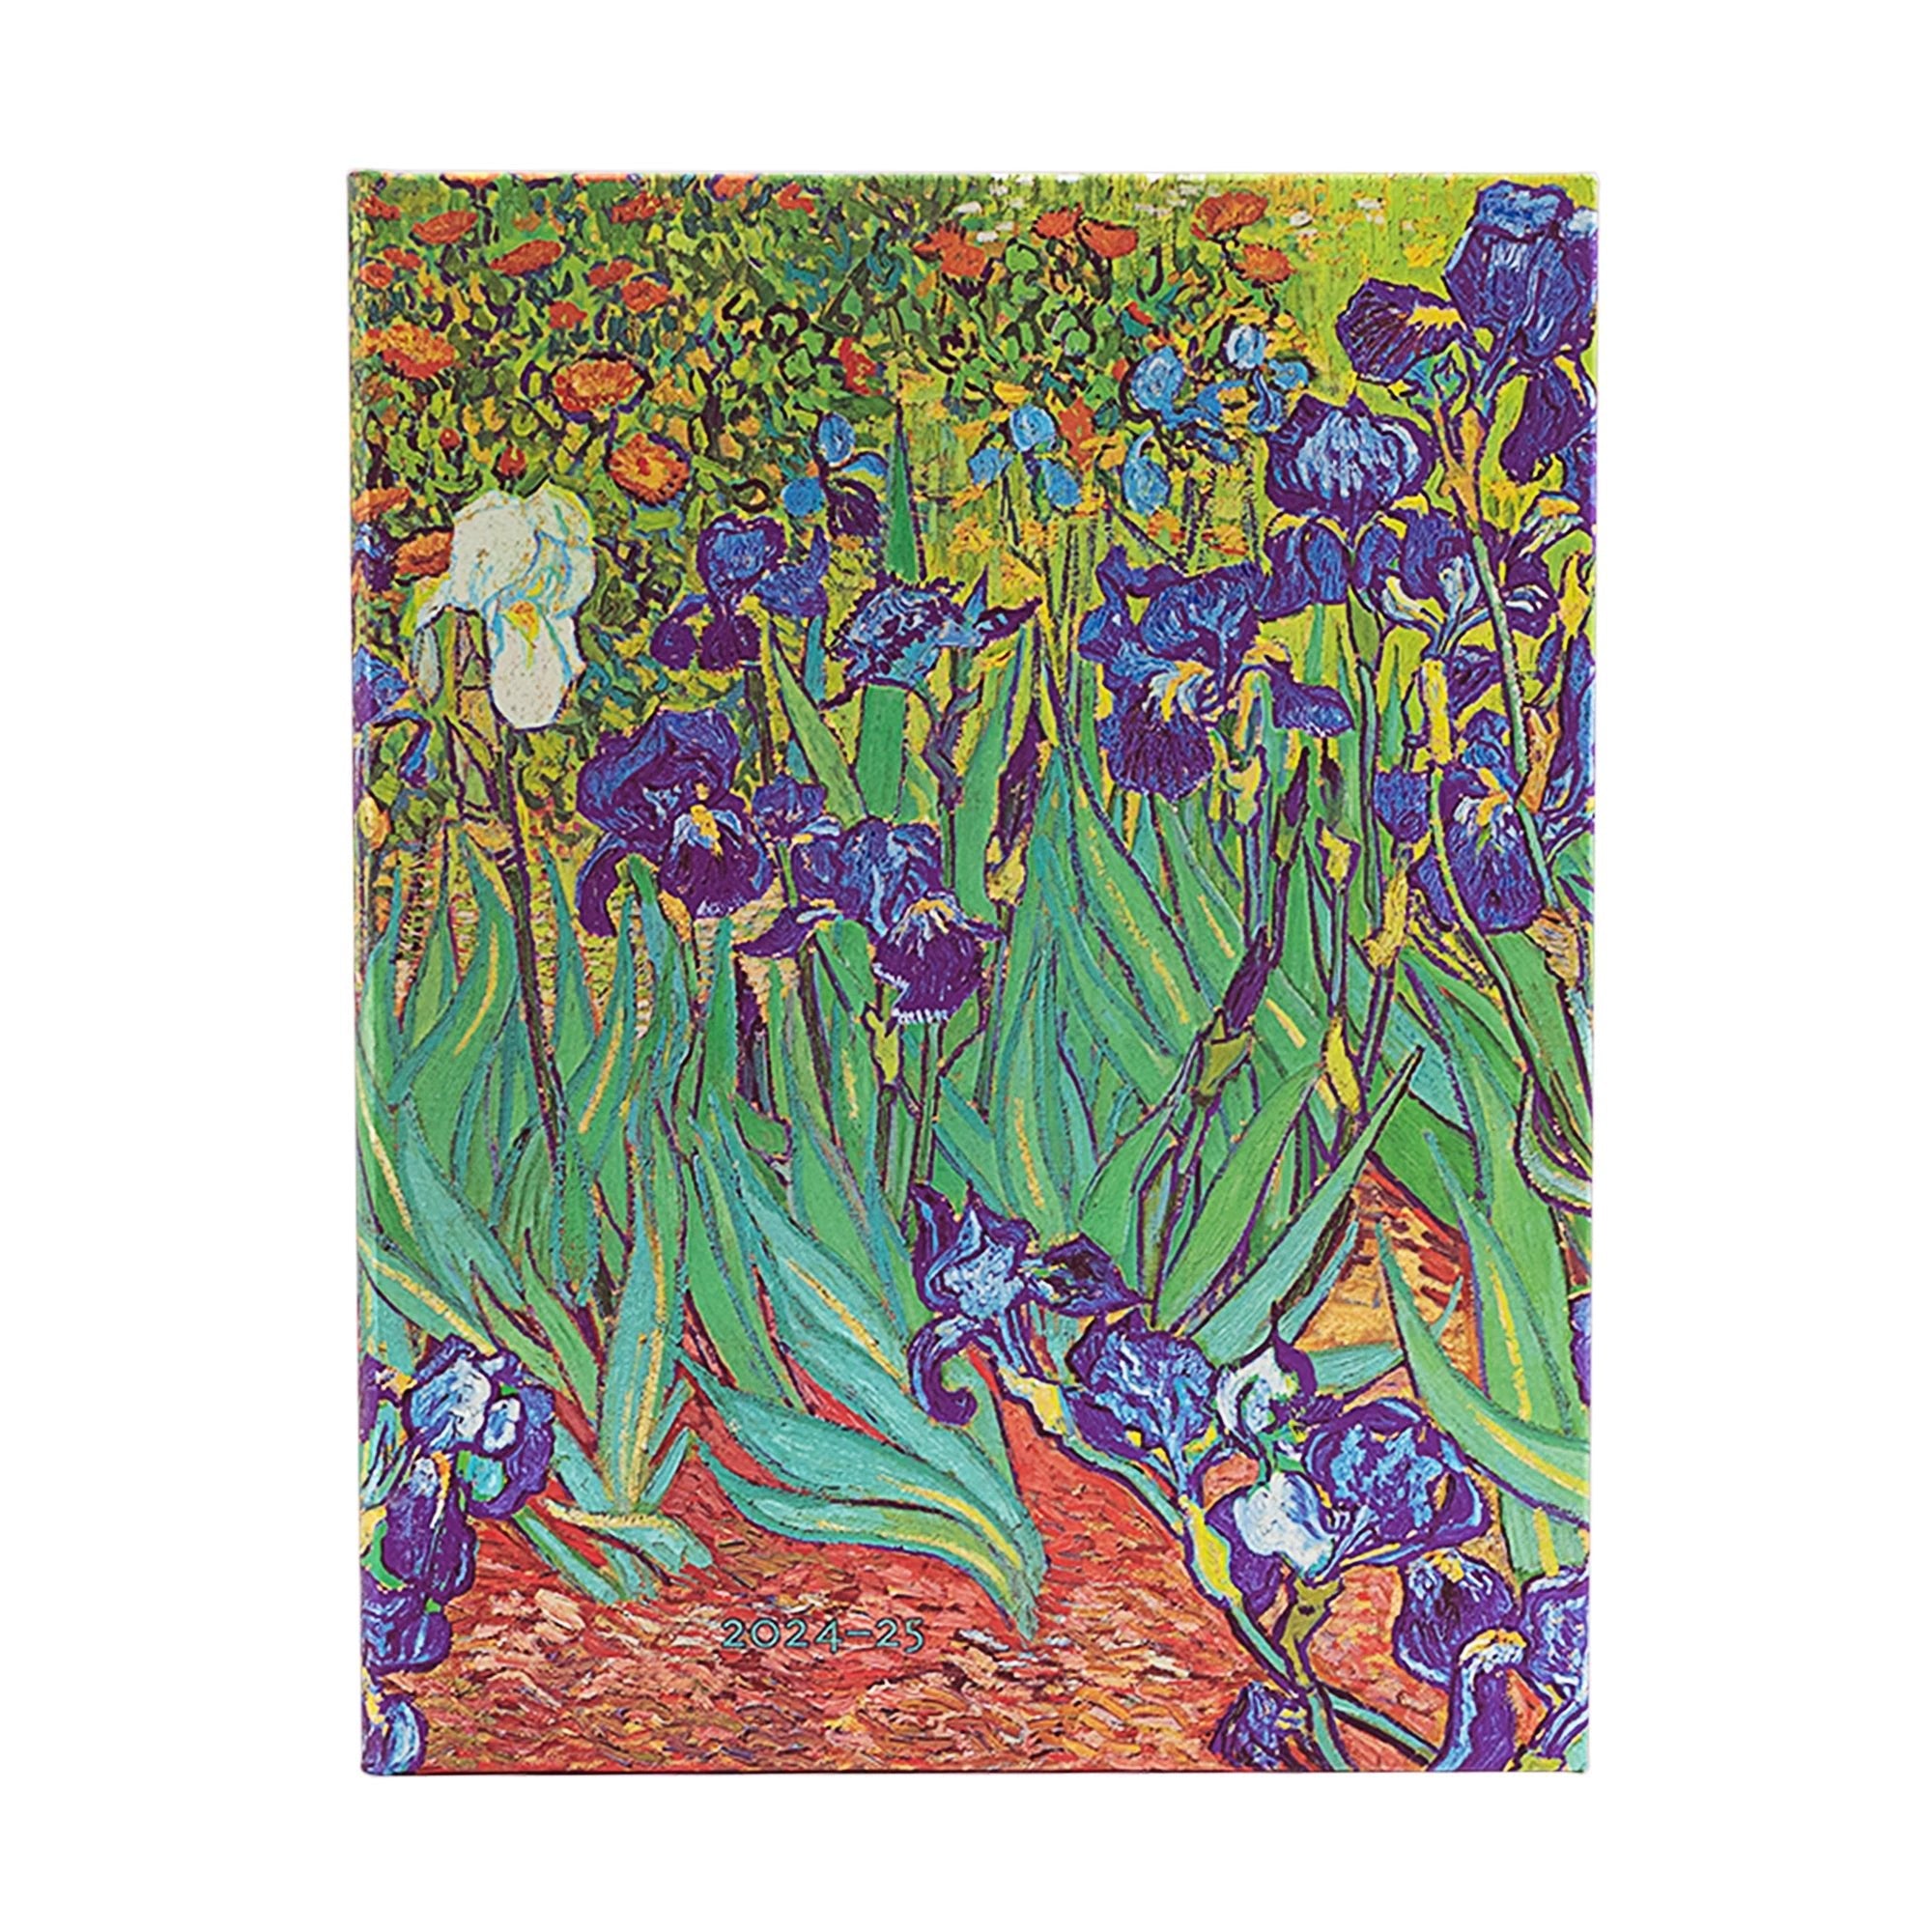 Agenda PAPERBLANKS 2025 Iris de Van Gogh - 18 mois - 1 semaine sur 2 pages - Ultra Rigide Vertical 208p - 9781408754009